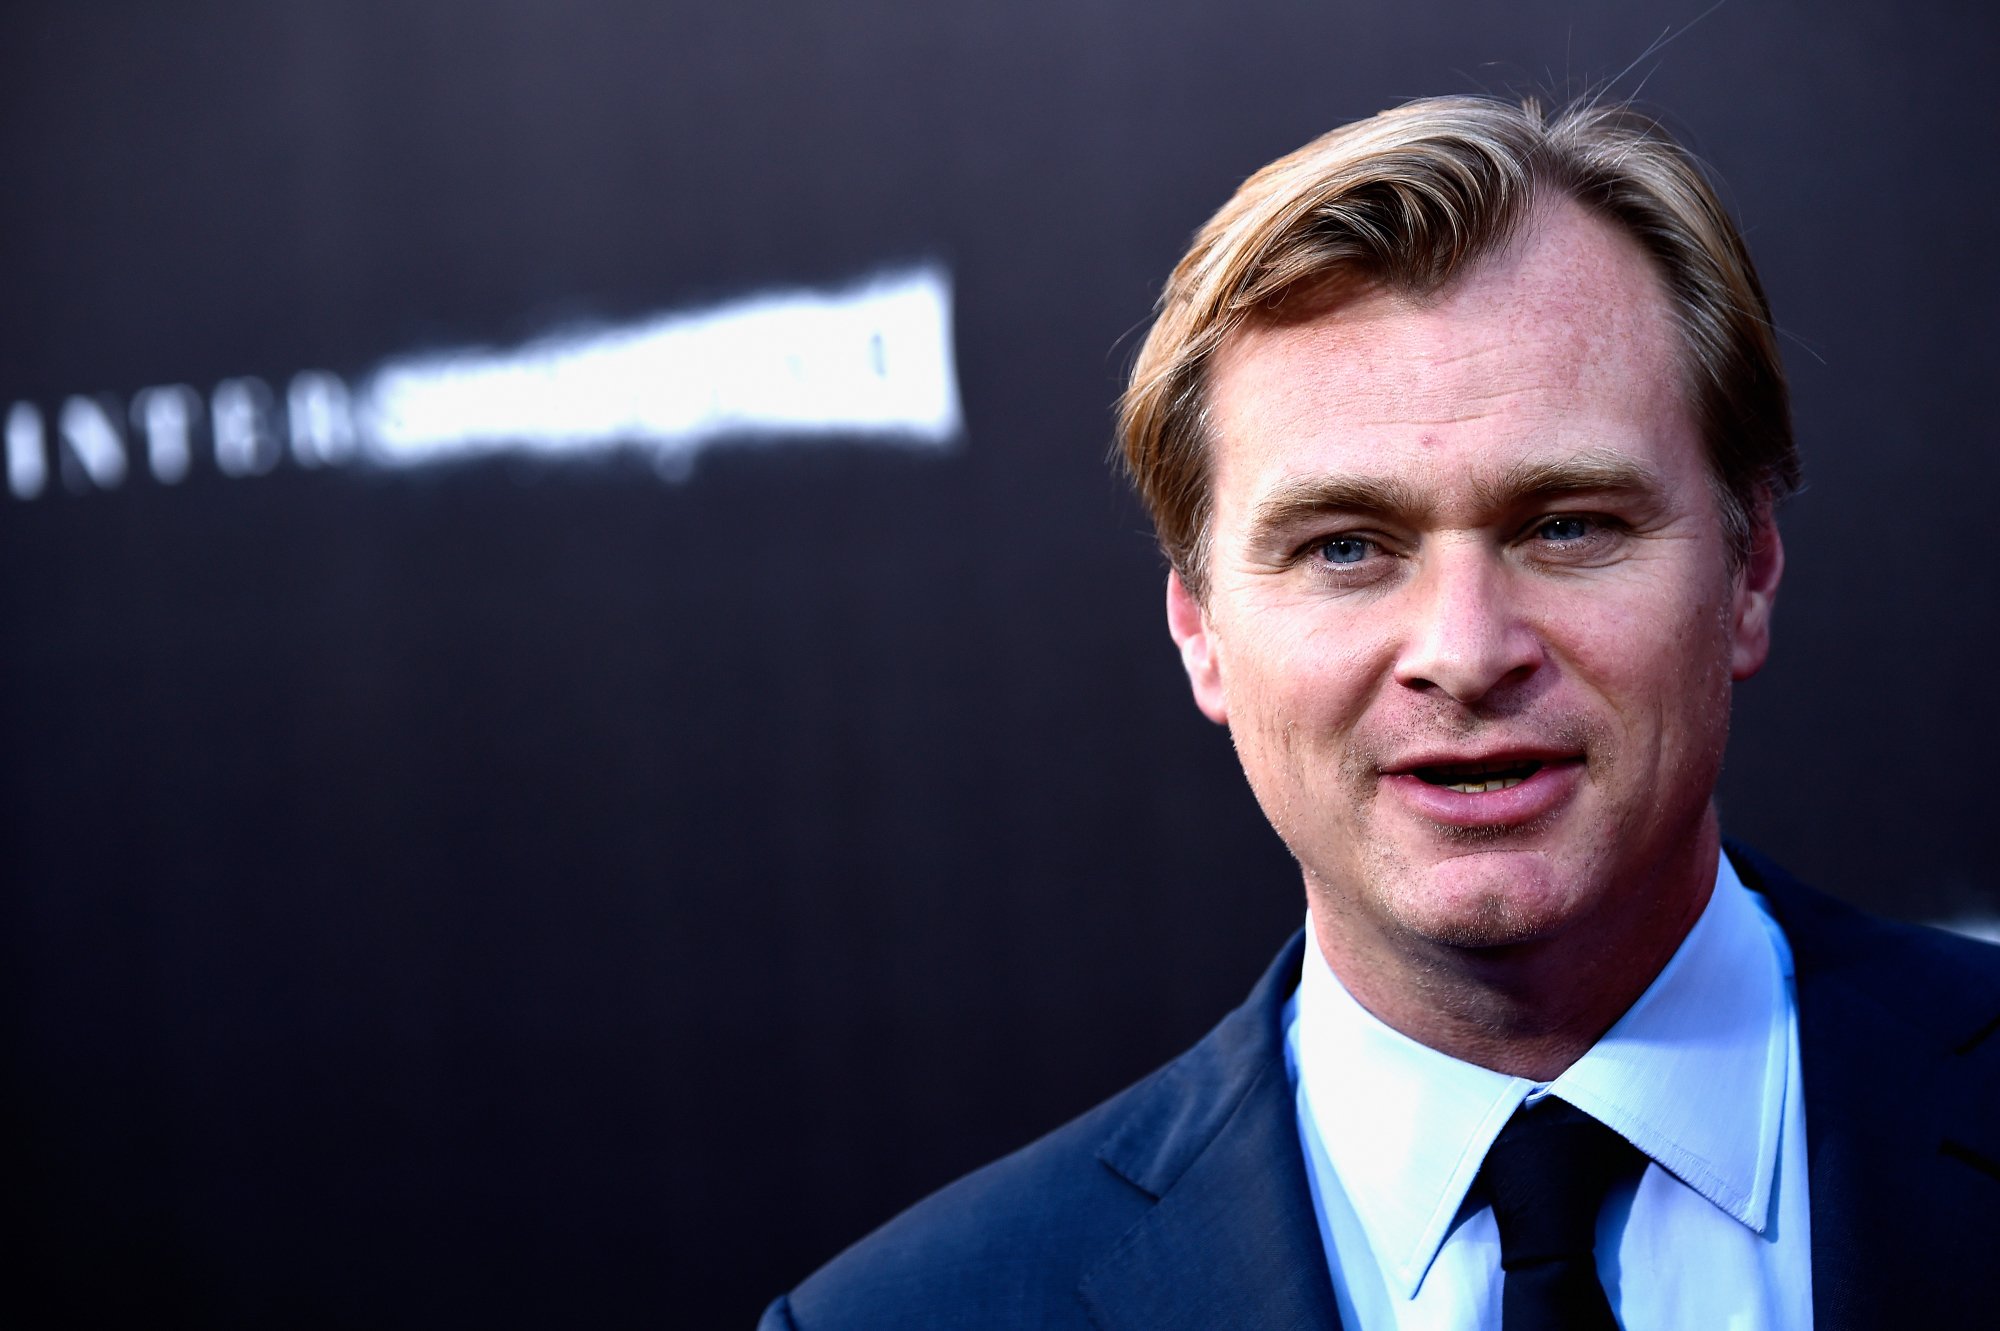 'Oppenheimer' filmmaker Christopher Nolan at the premiere of 'Interstellar' in a suit